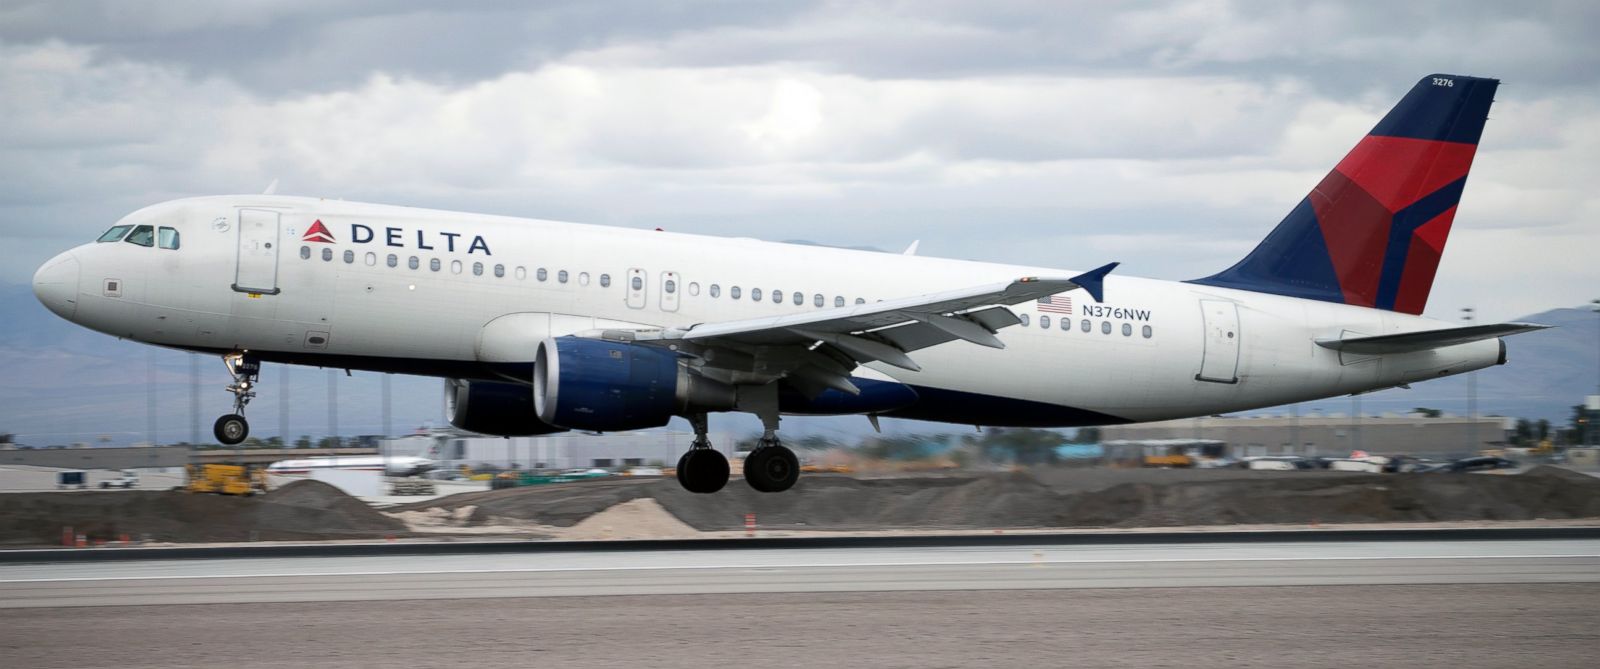 Delta Plane Mistakenly Lands at South Dakota Air Force Base - ABC News